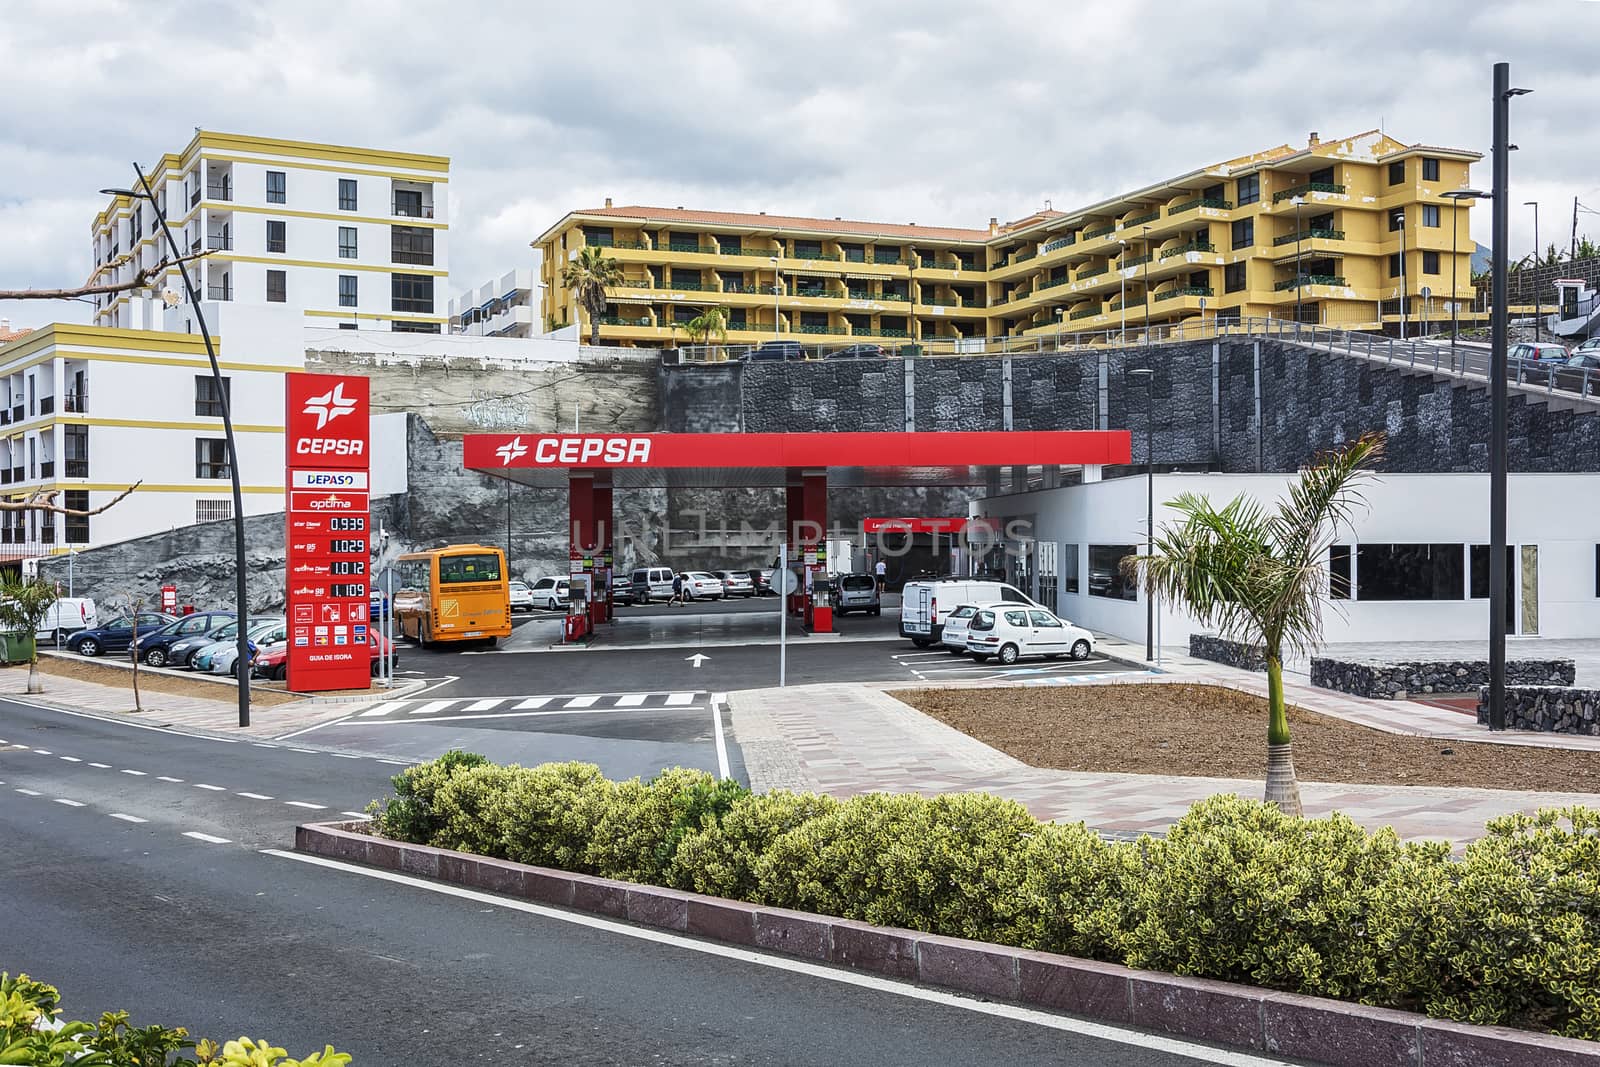 Spain, Tenerife - May 08, 2018: Car refueling station CEPSA. CEPSA is a Spanish petrochemical corporation.